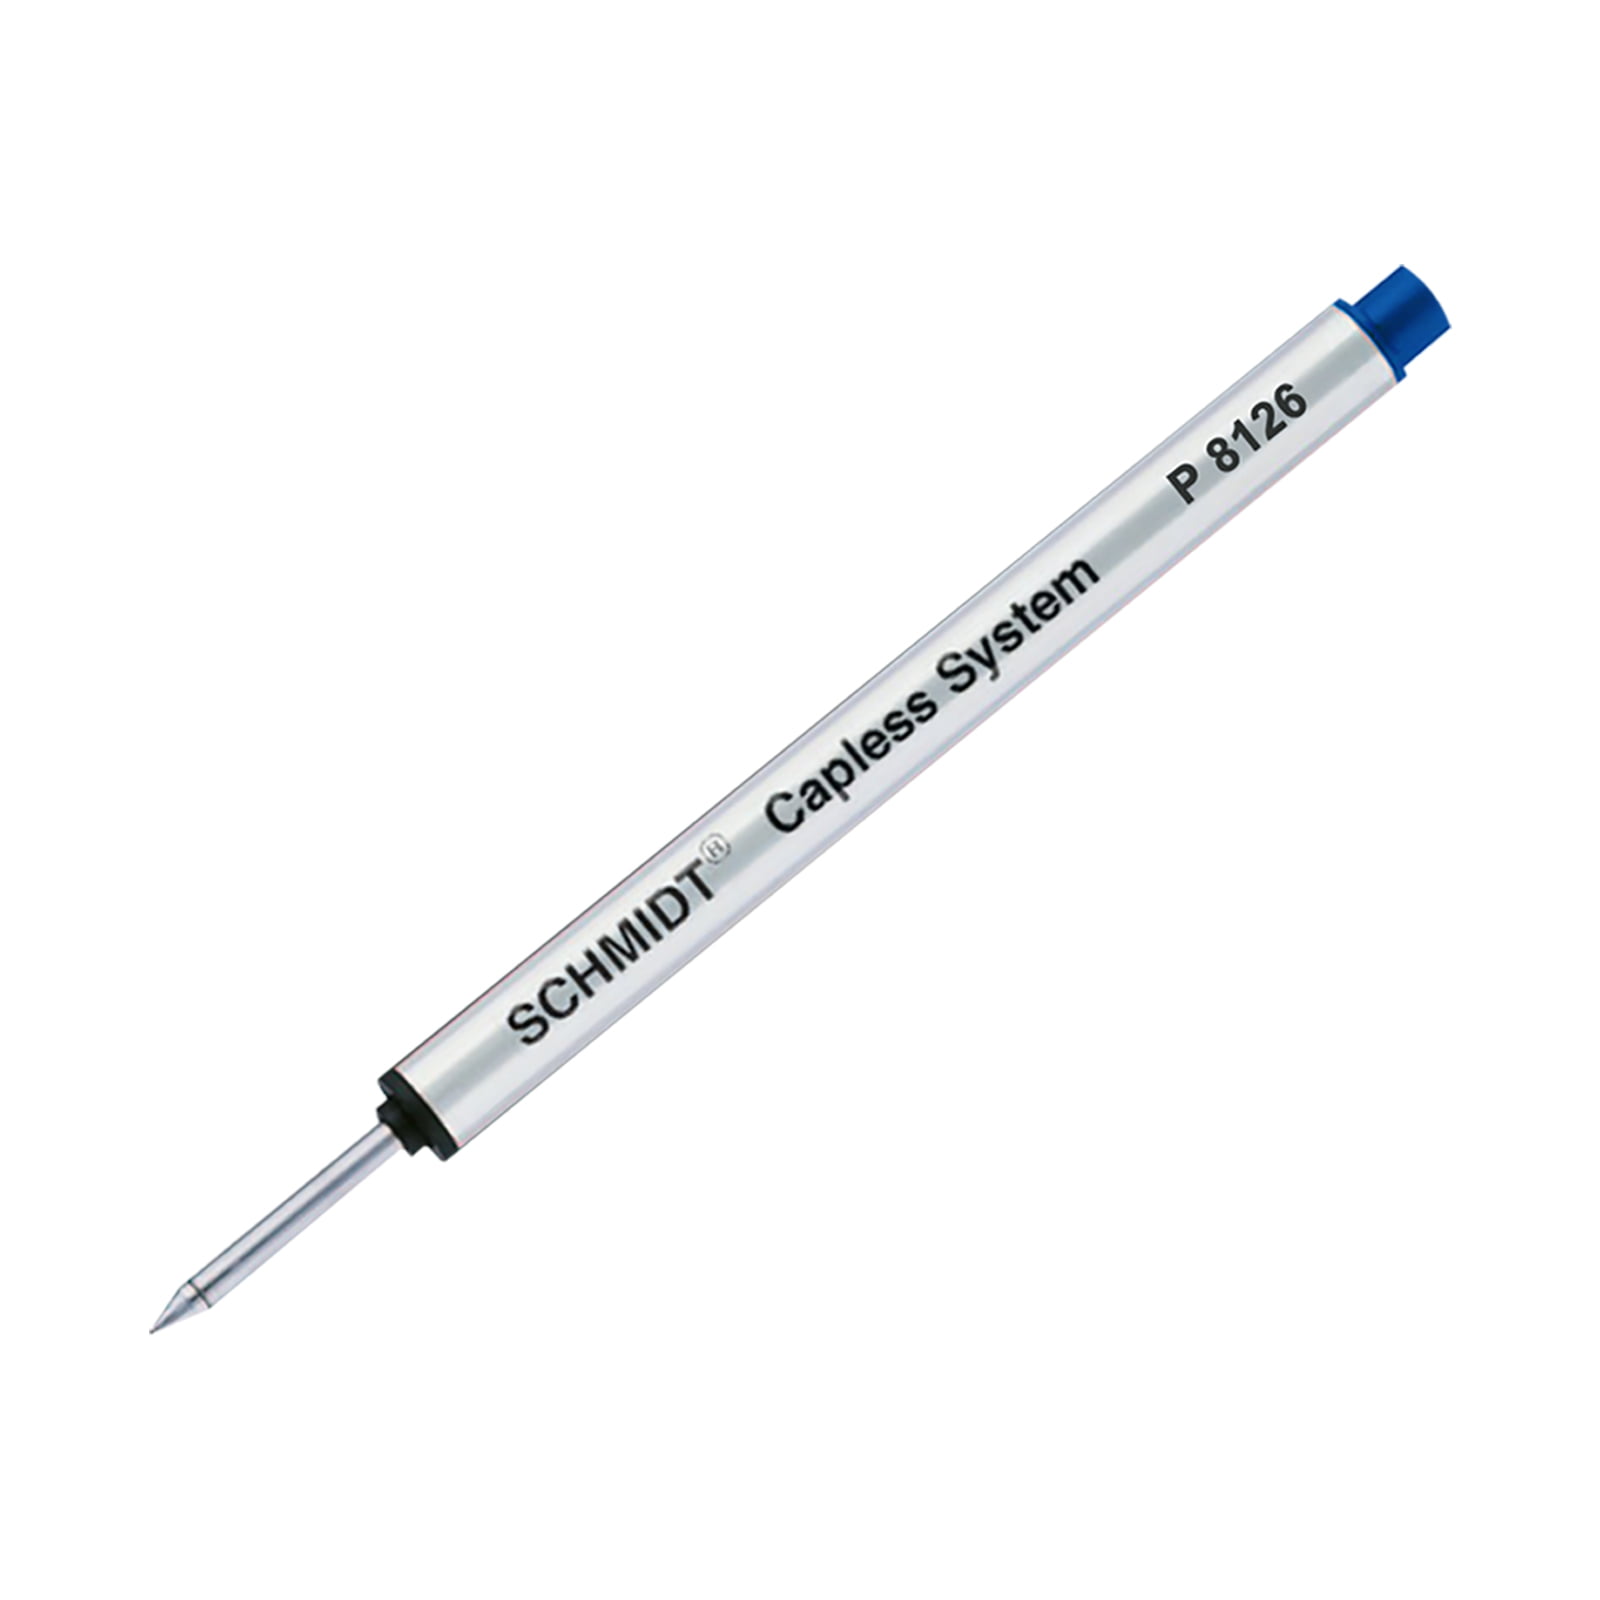 Fits Yard O Led 5 Schmidt A3 700 Ballpoint Pen Refill Blue Medium 